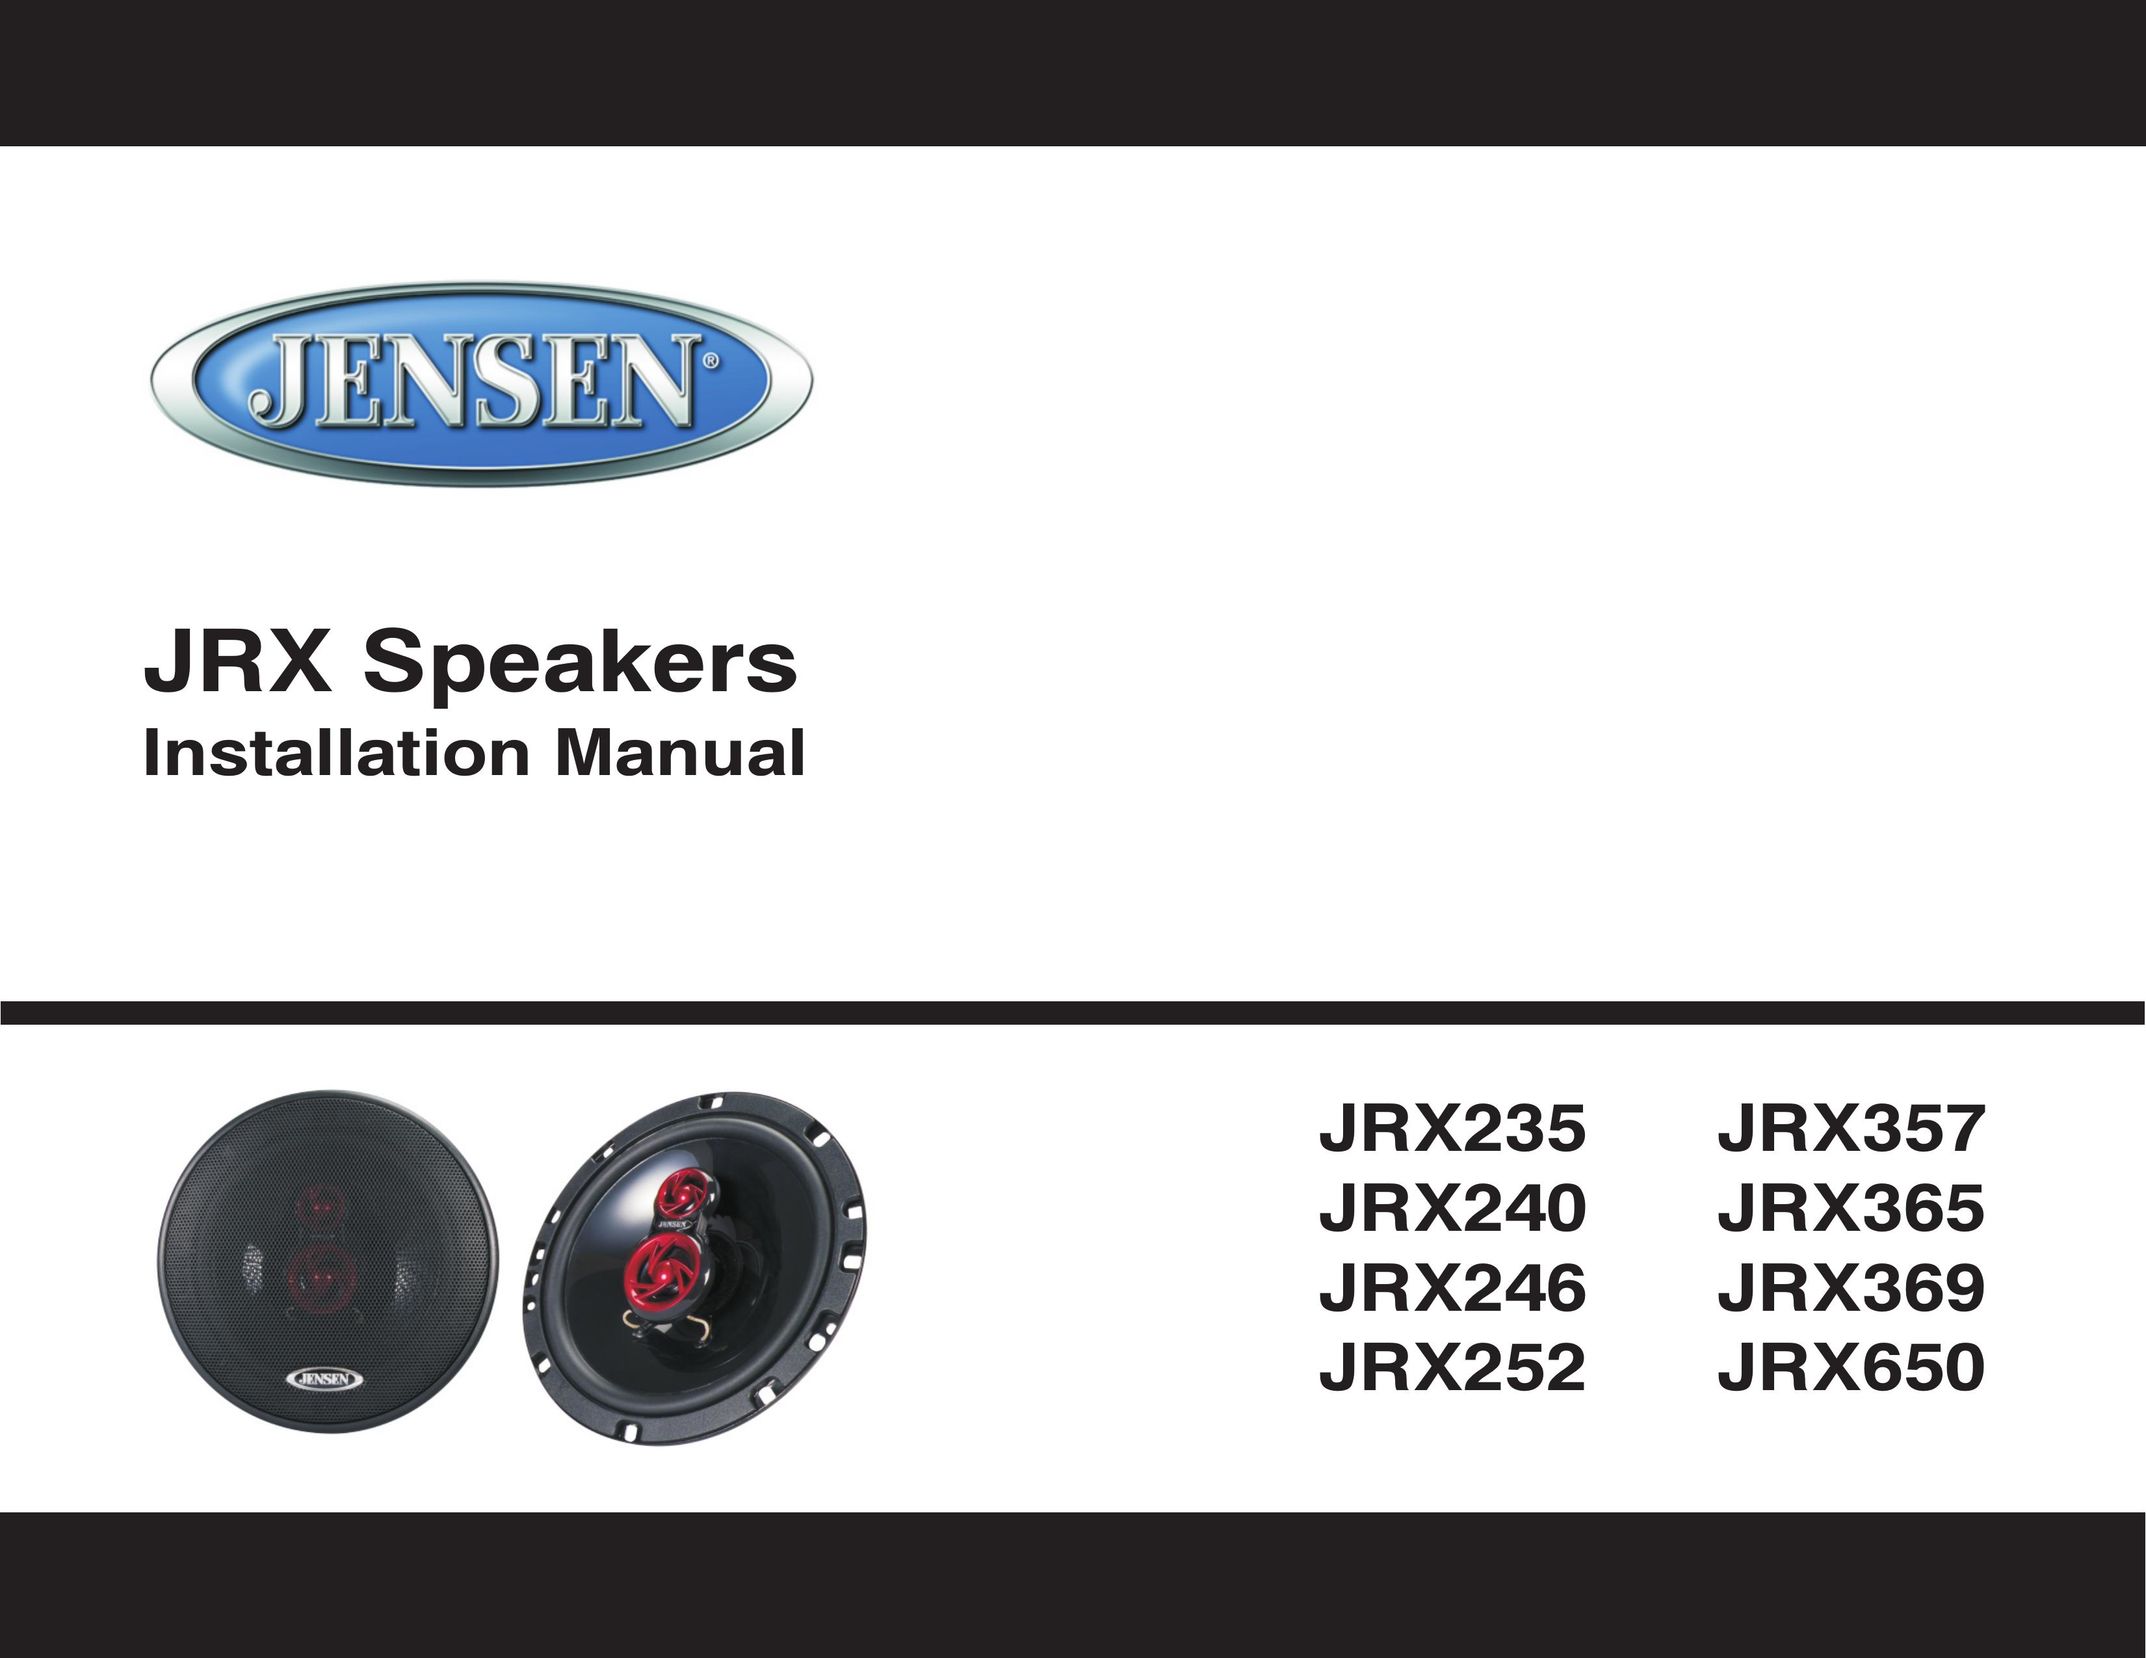 Jensen JRX369 Car Speaker User Manual